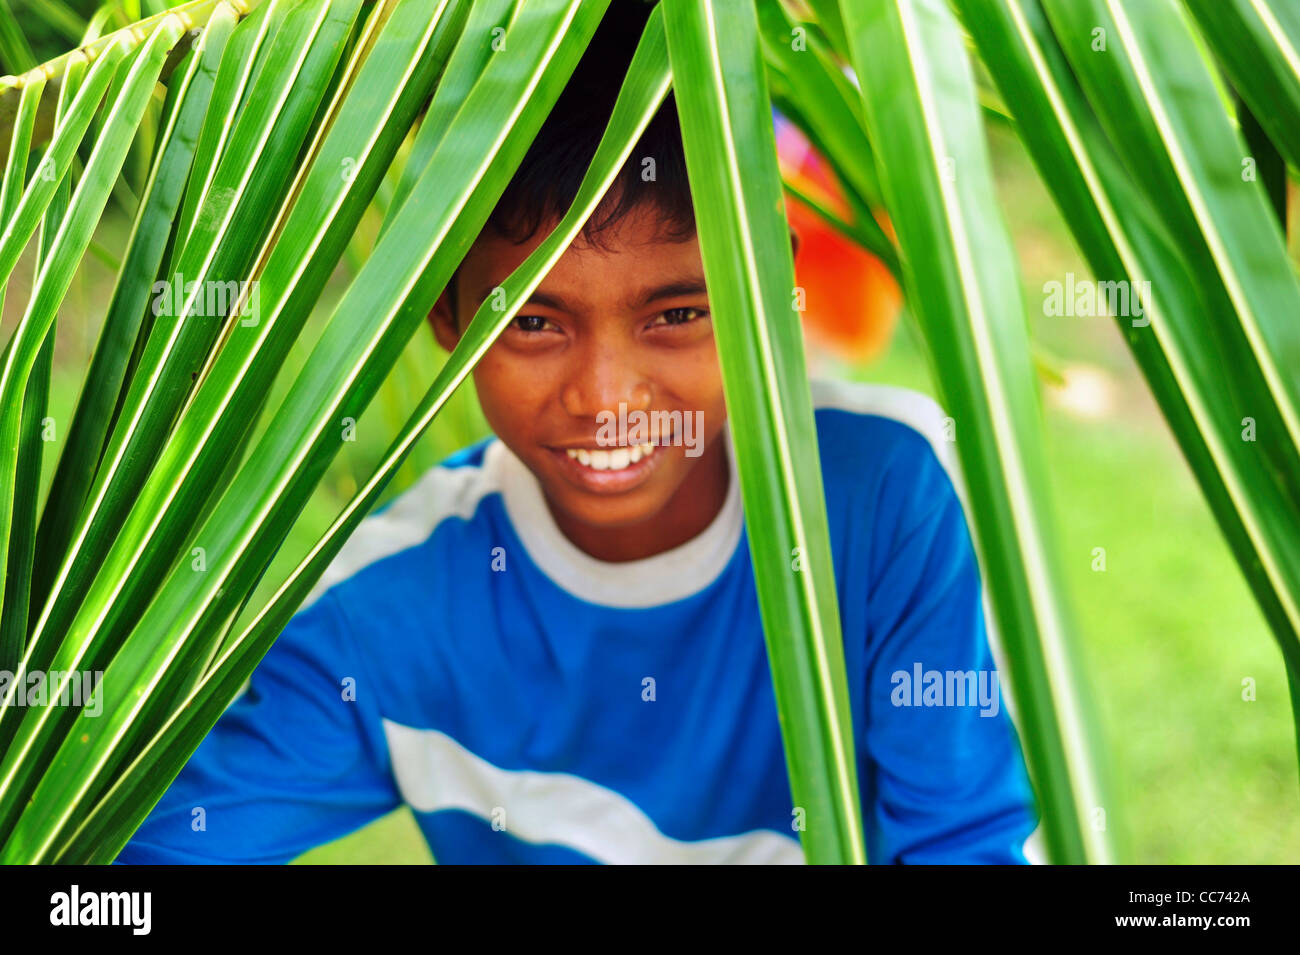 Indonesia, Sumatra, Banda Aceh, portrait of young boy amidst green vegetation Stock Photo